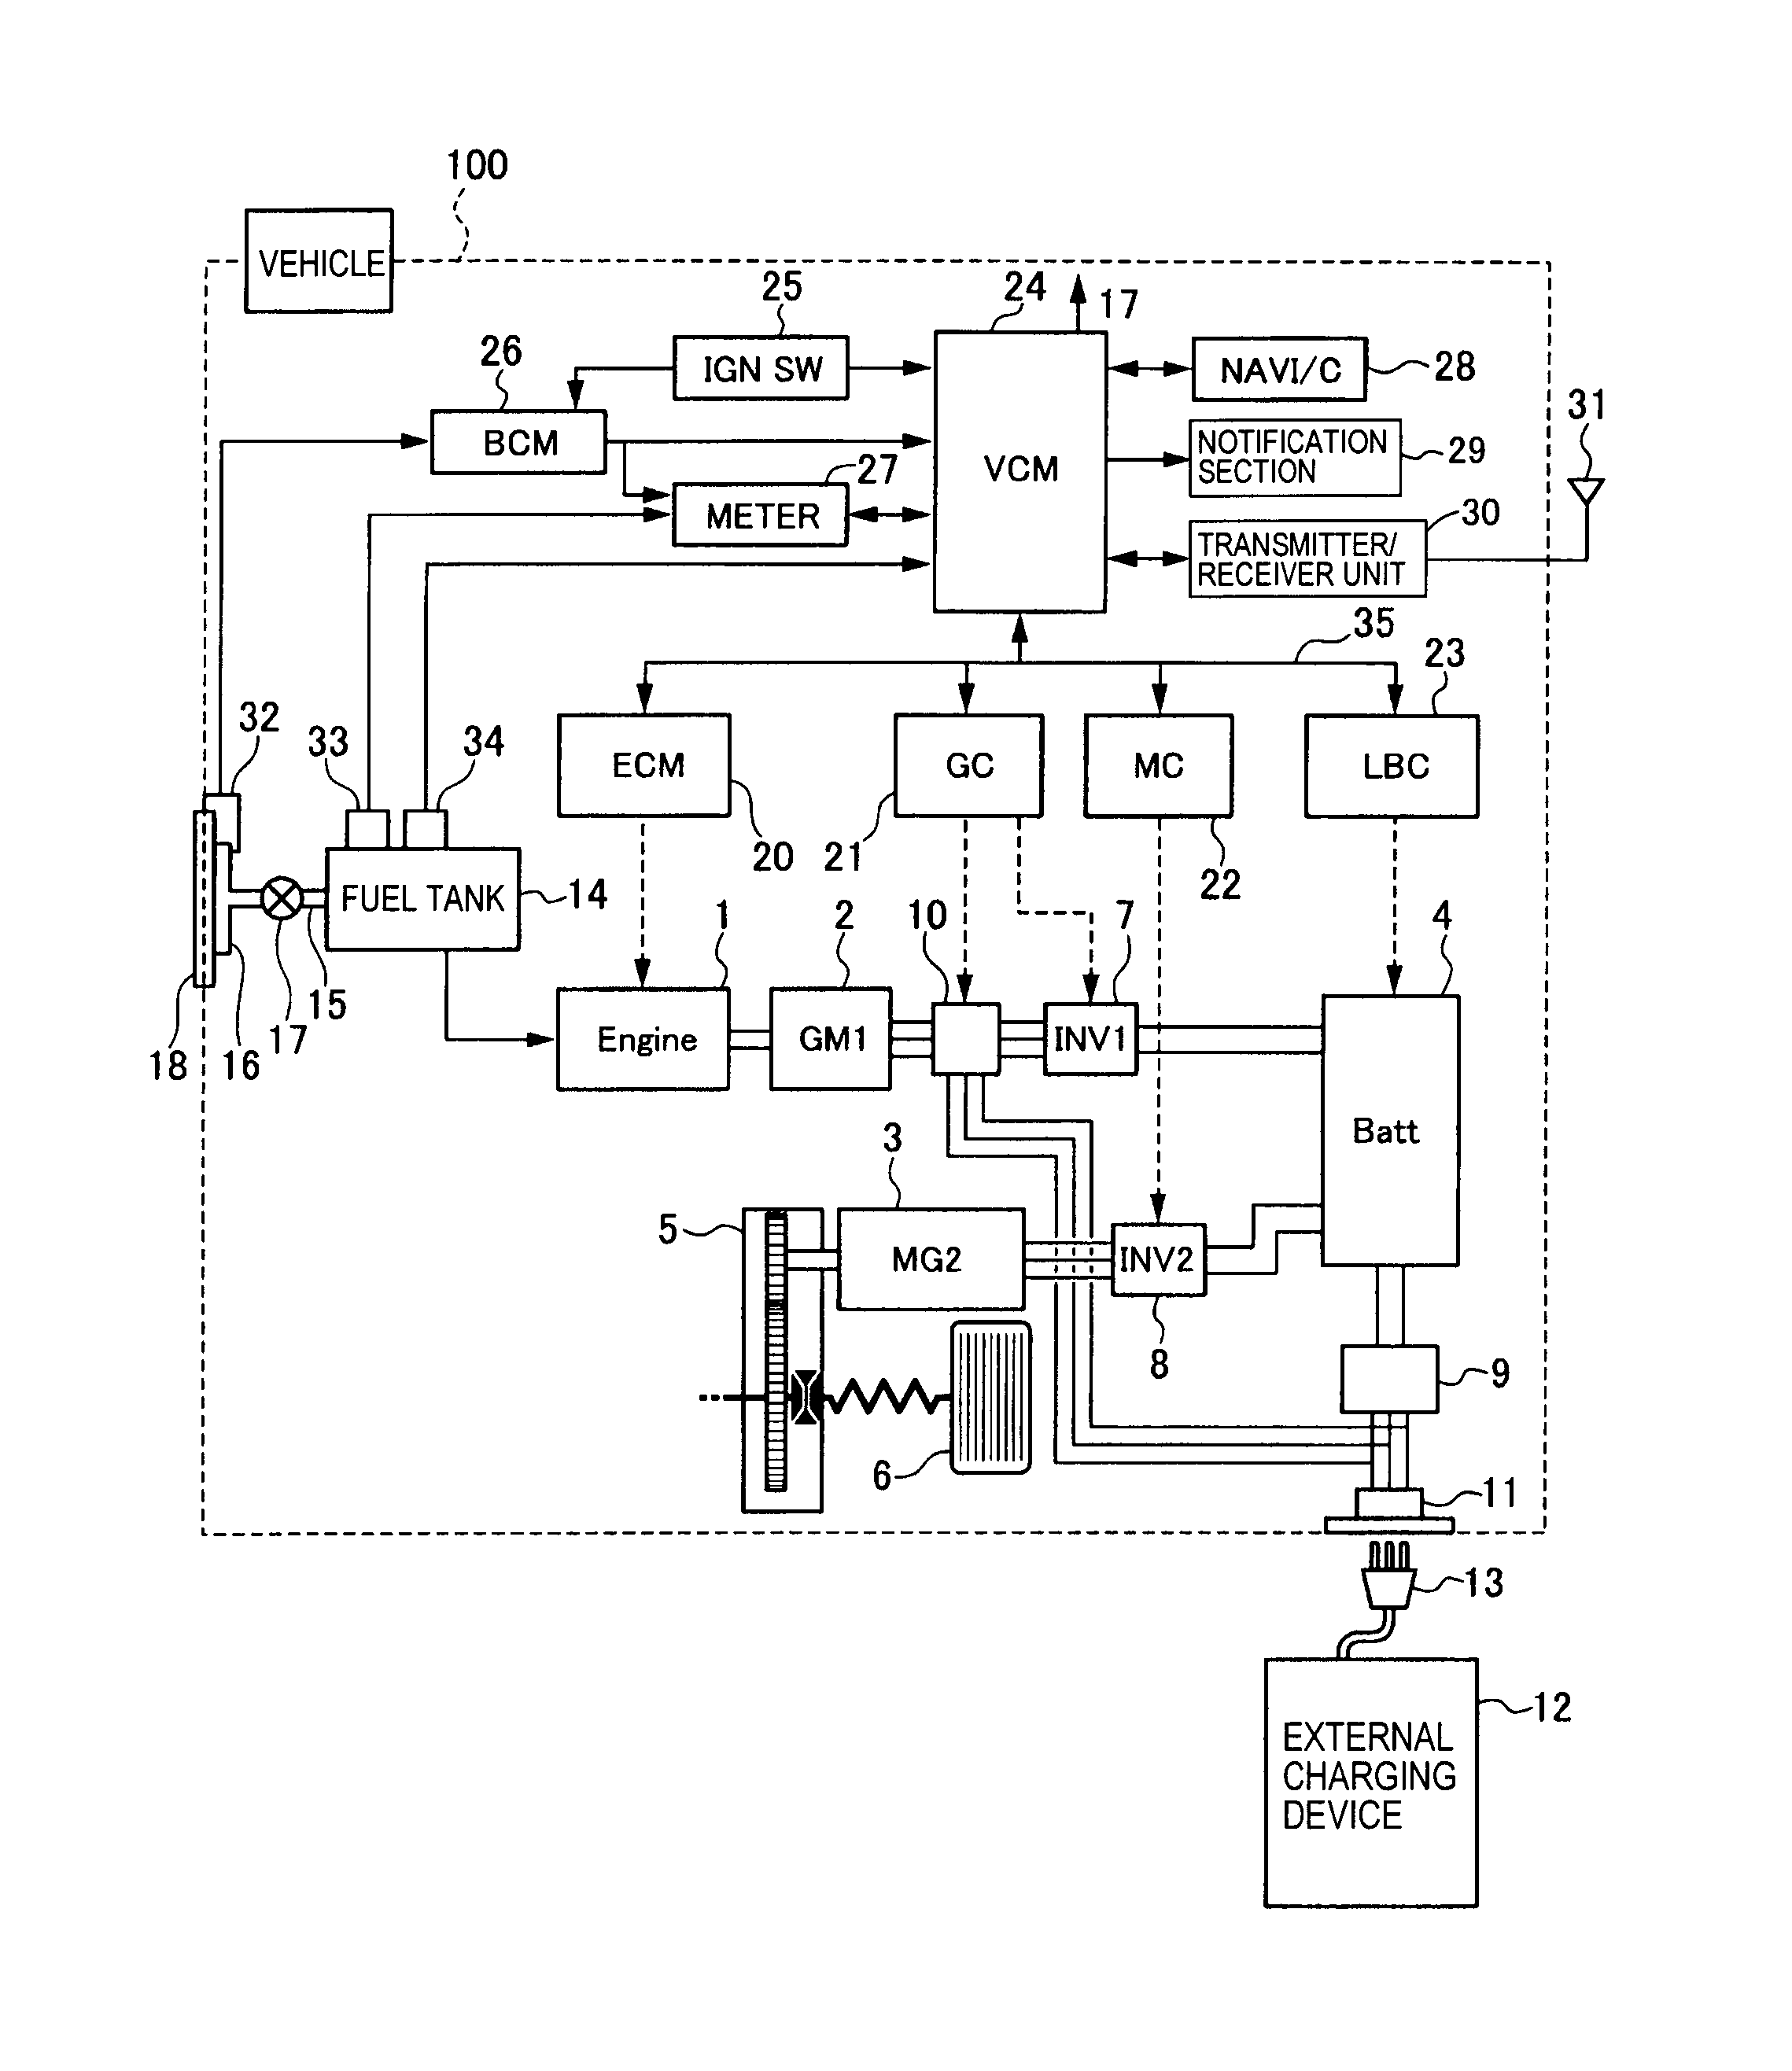 1969 airstream wiring diagram